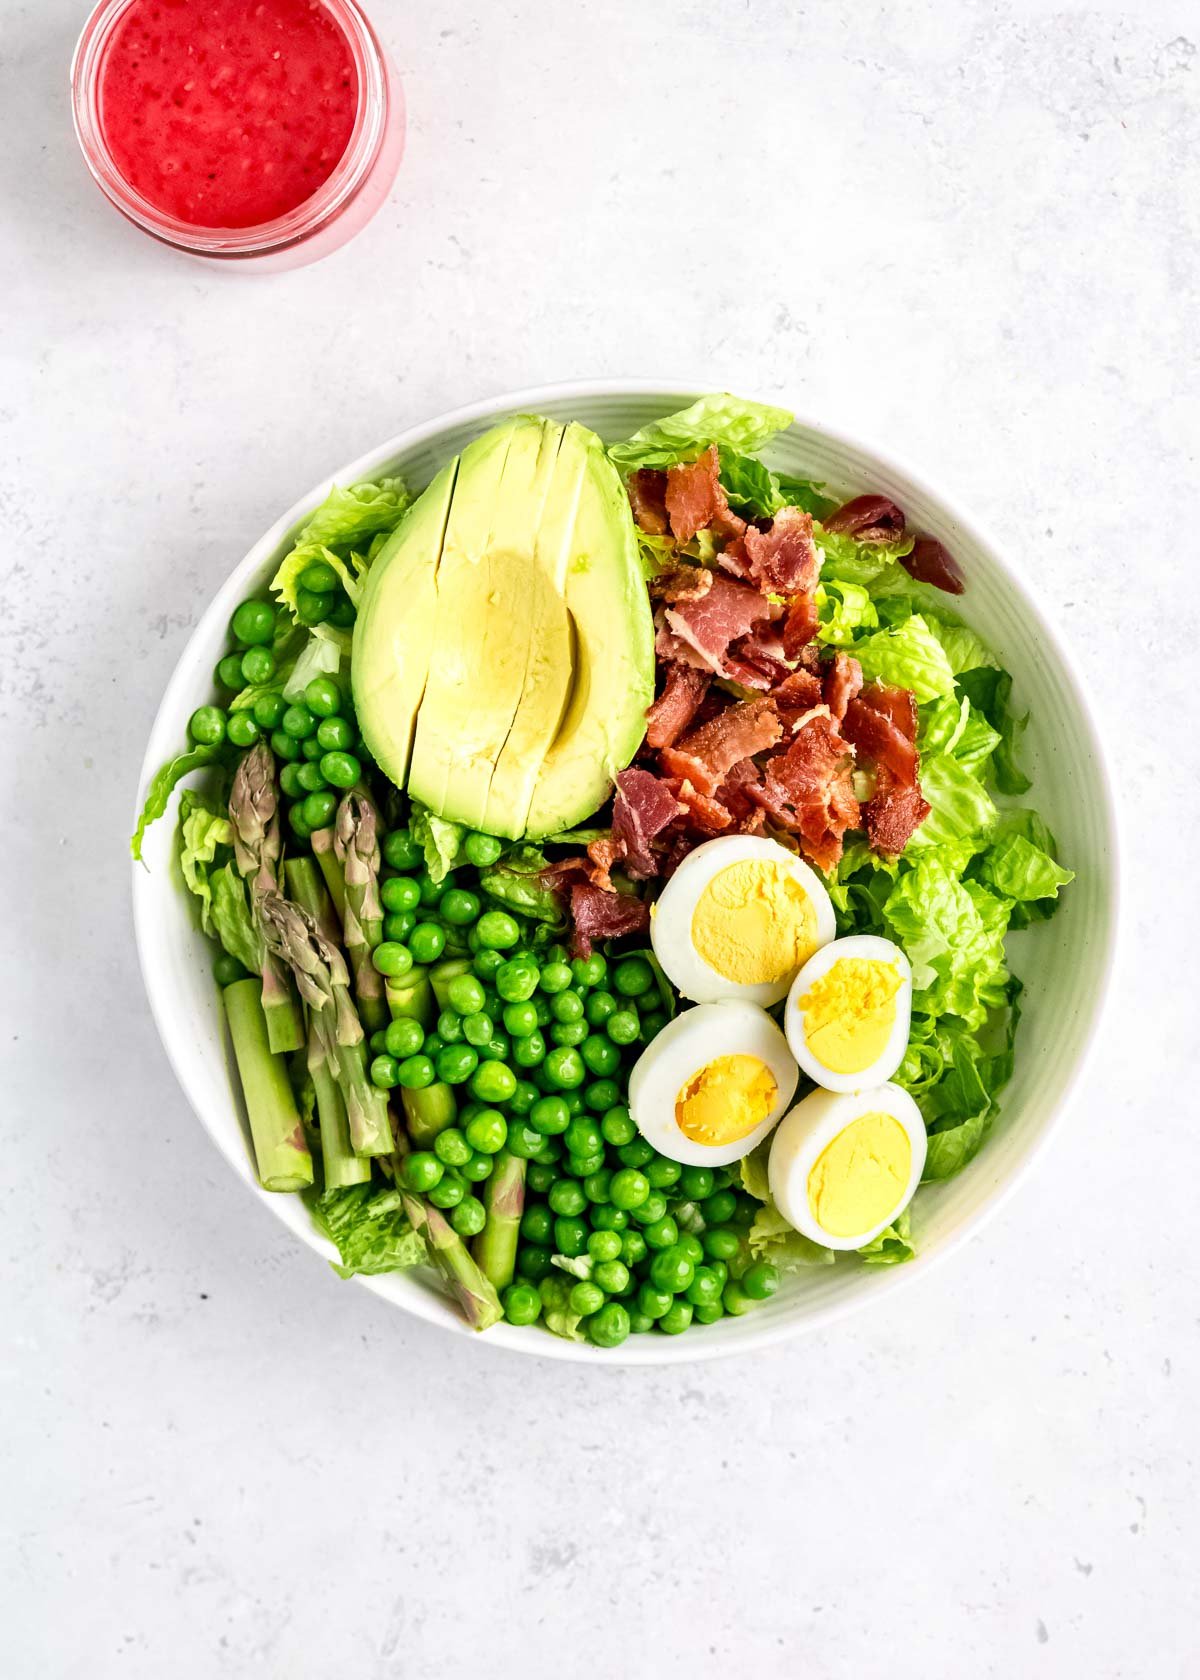 asparagus, avocado, peas, bacon, eggs, and lettuce in white bowl